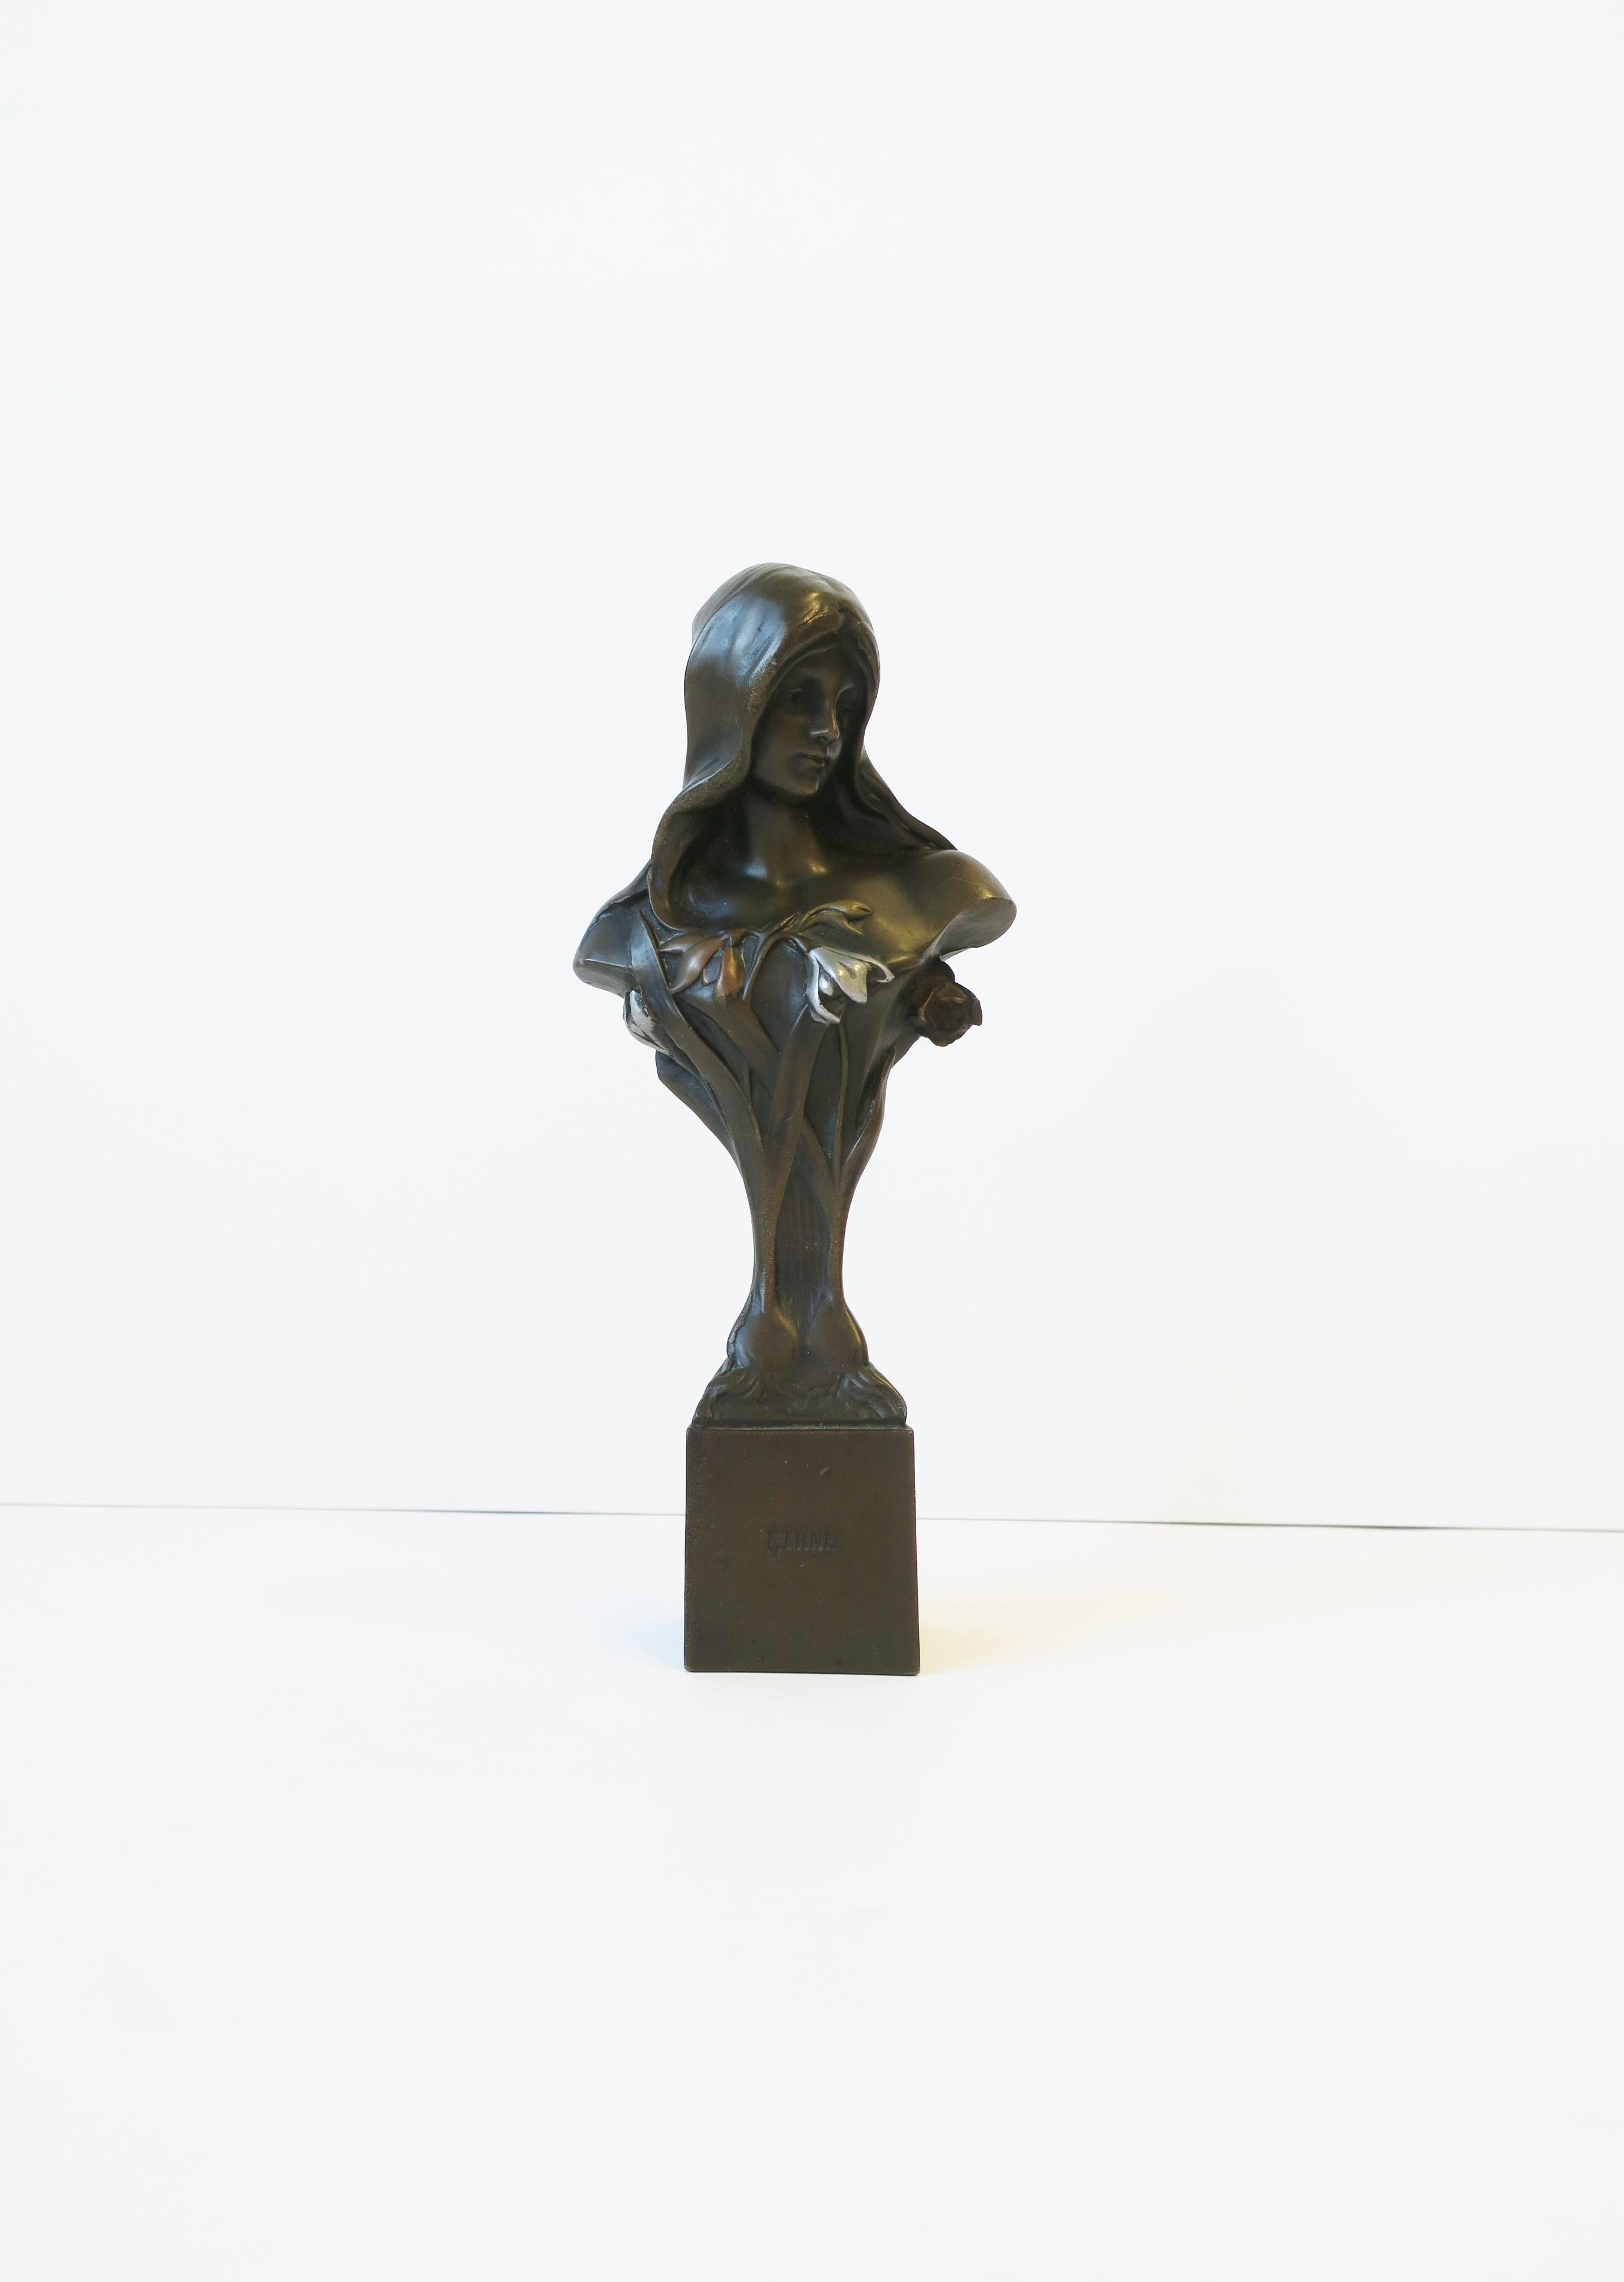 An Art Nouveau female bronze figurative bust sculpture of a young woman 